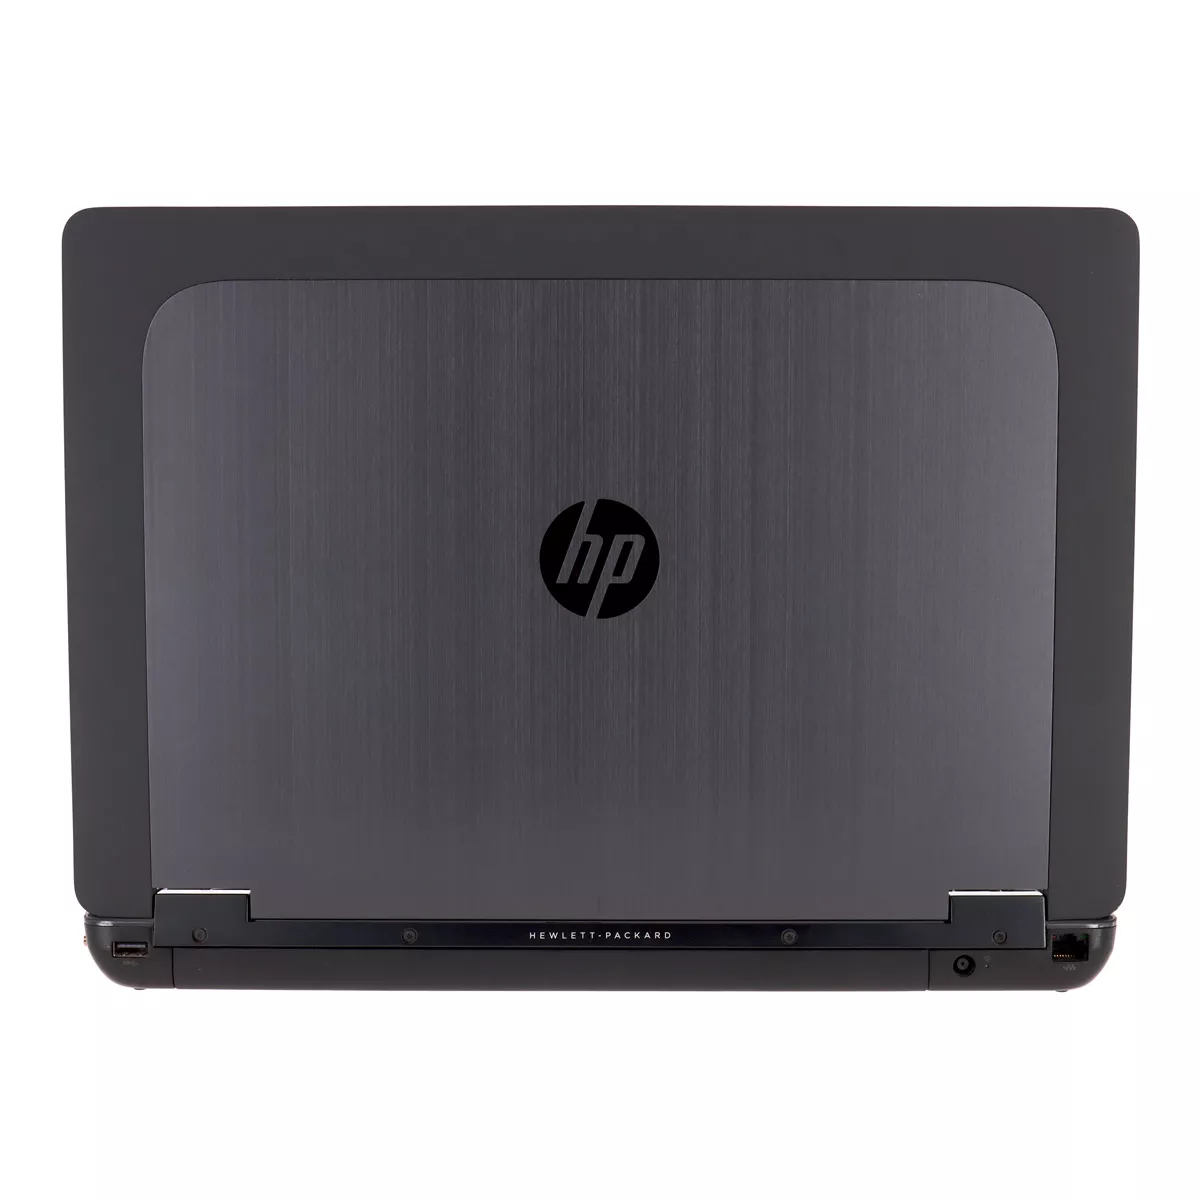 HP ZBook 15 G2 Core i7 4810MQ nVidia Quadro K1100M Full-HD 16 GB 240 GB SSD Webcam A